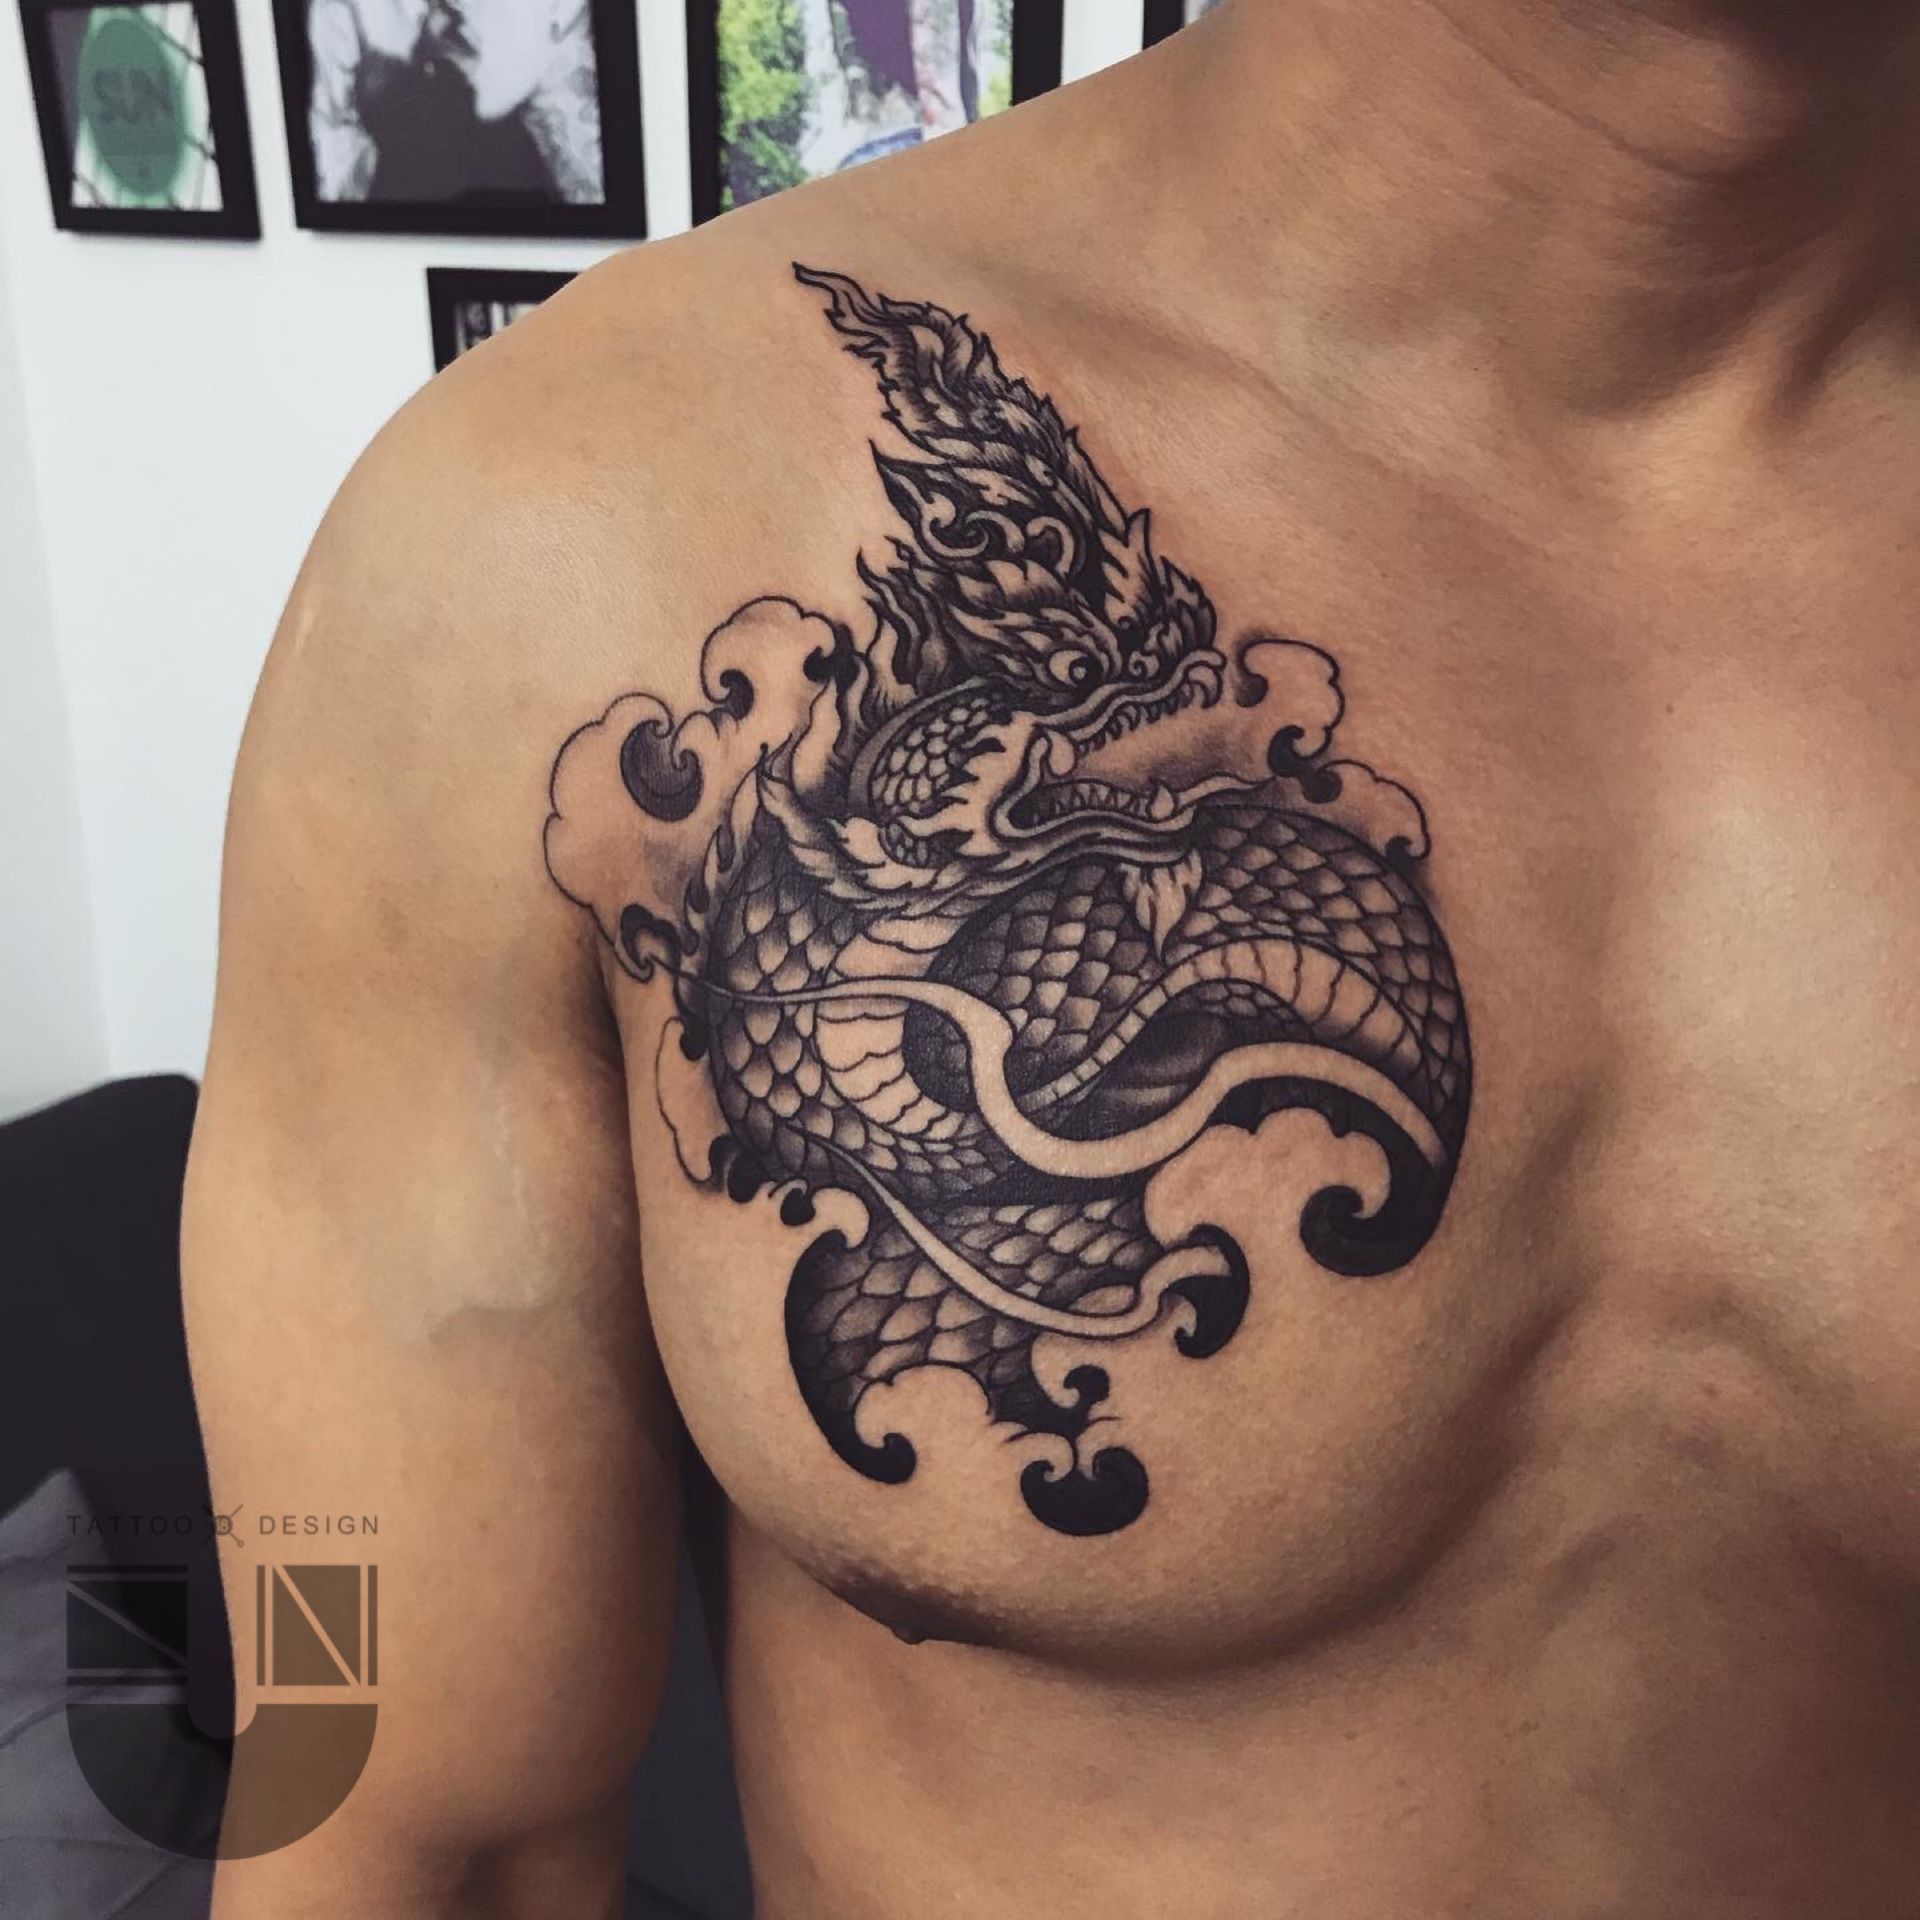 1134 Thai Dragon Tattoo Images Stock Photos  Vectors  Shutterstock